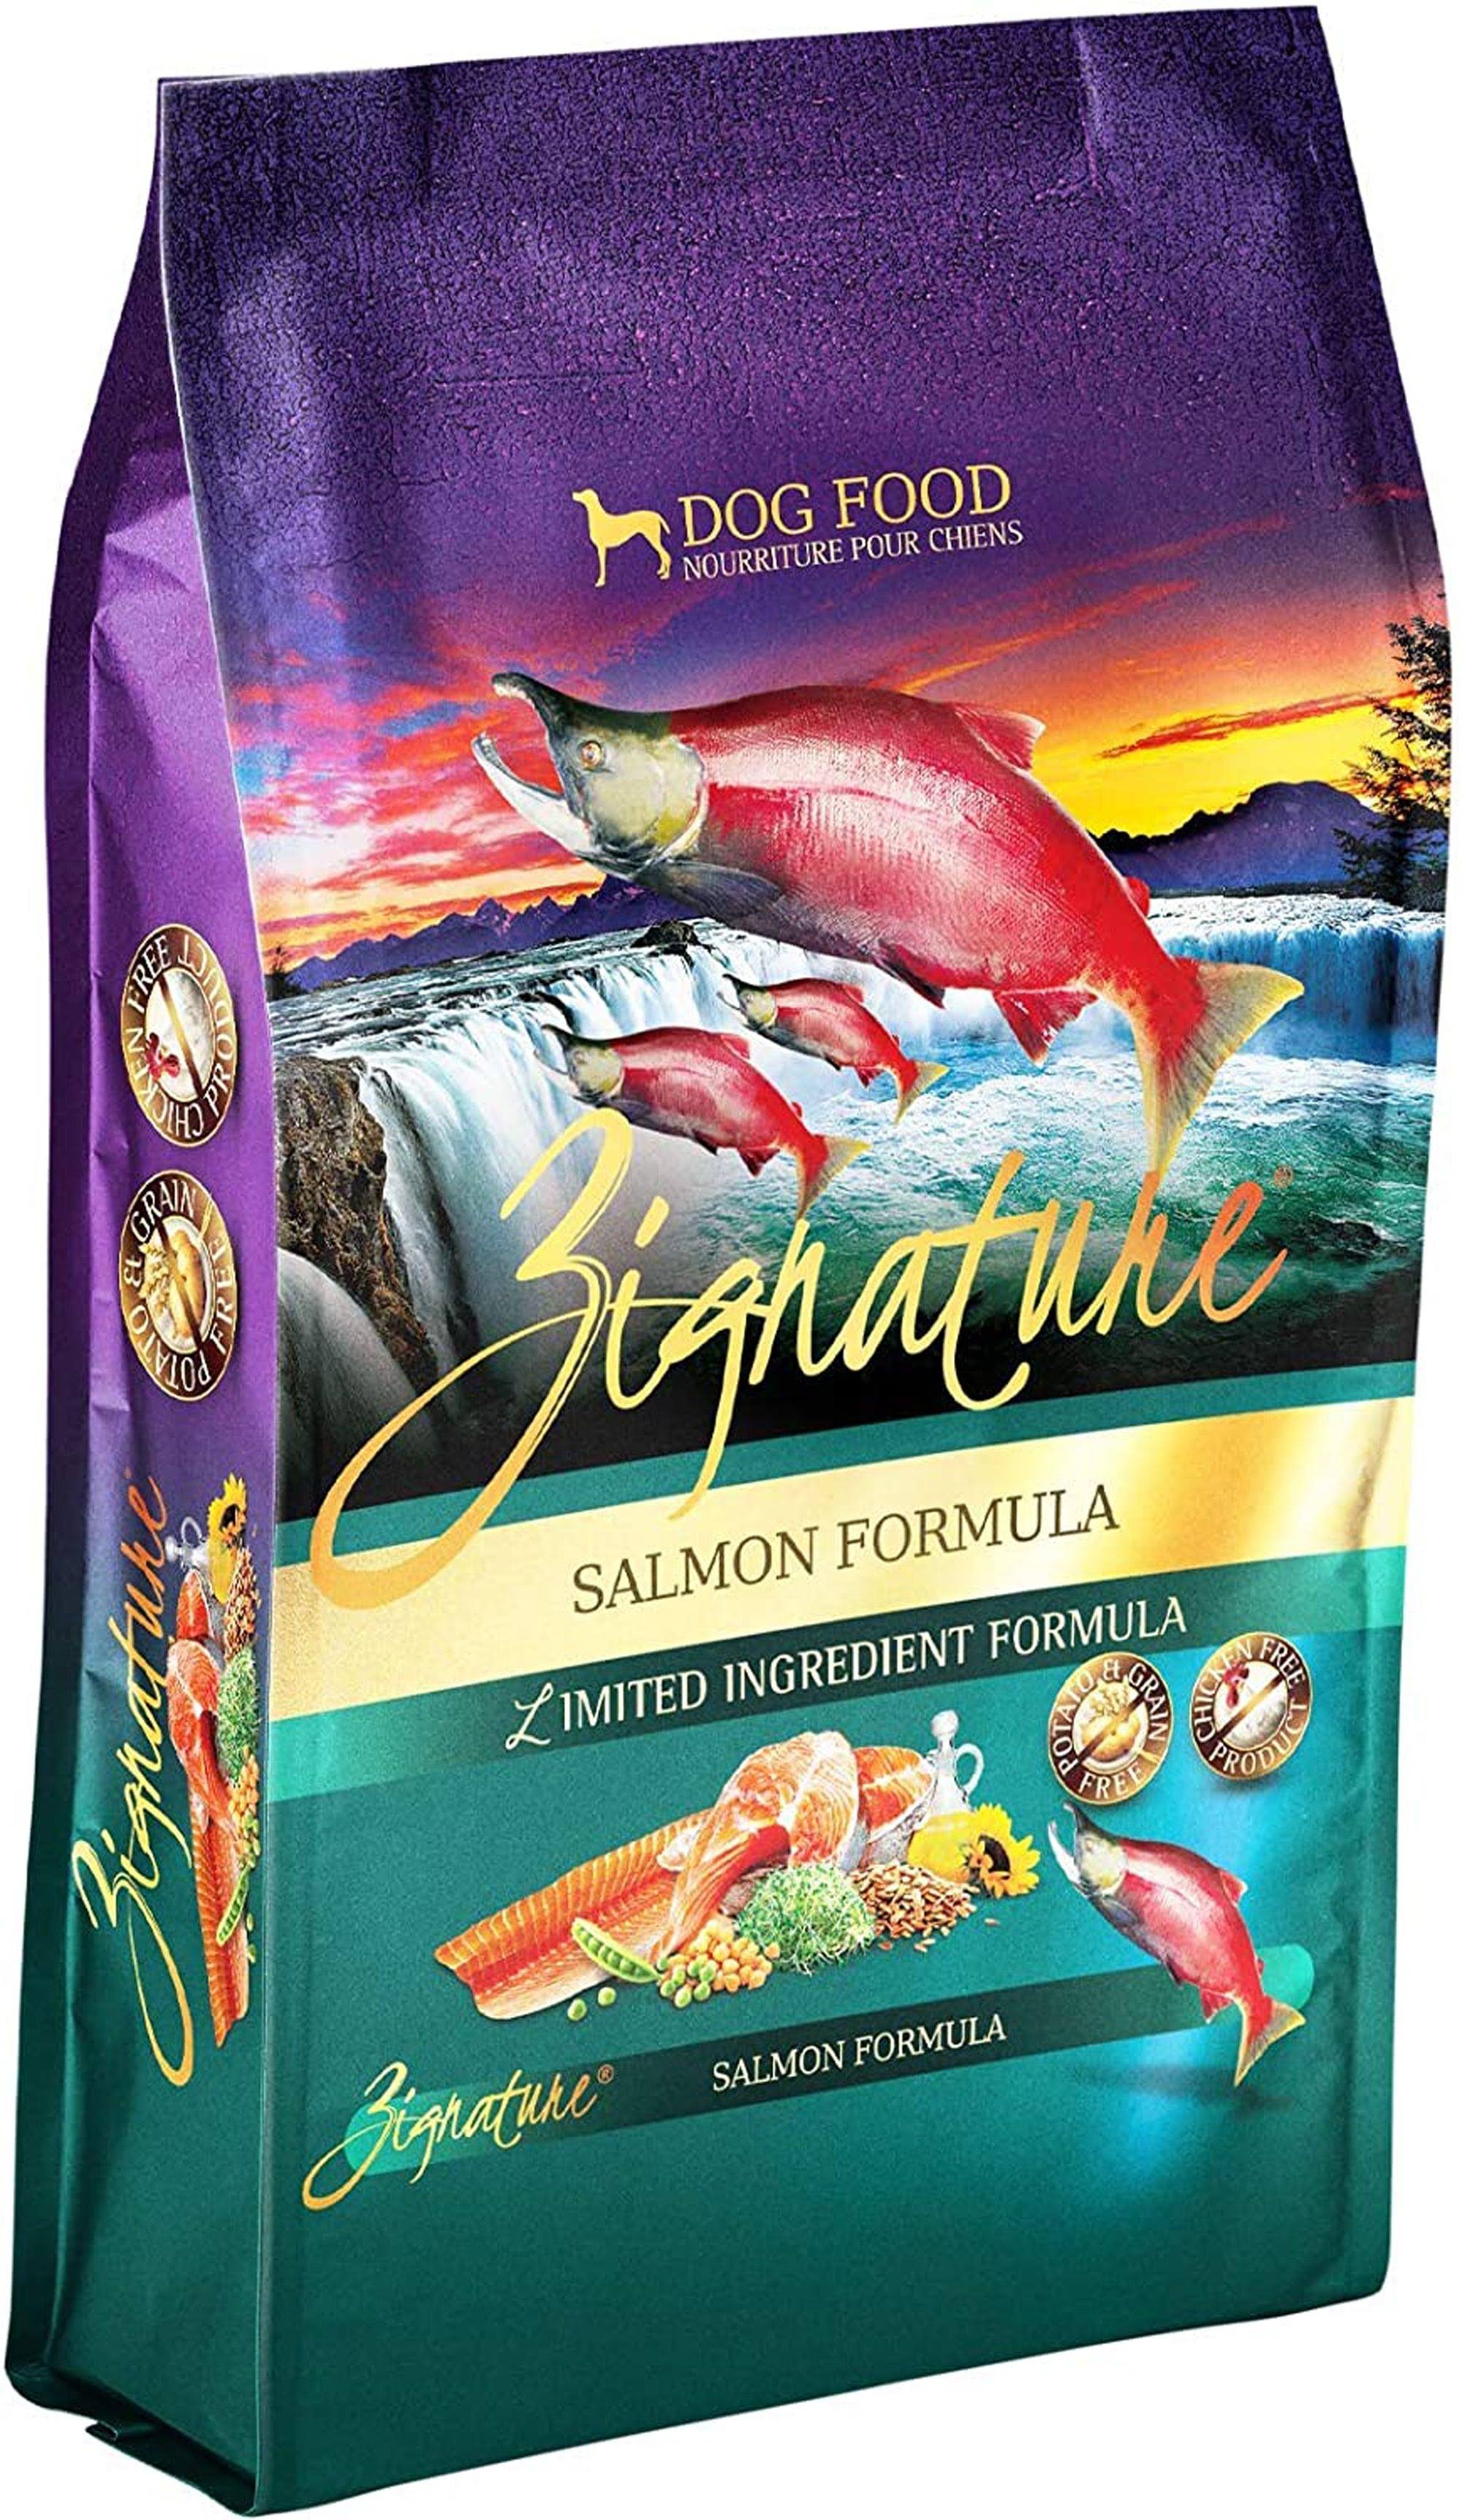 Salmon Limited Ingredient Formula - Dry Dog Food - Zignature